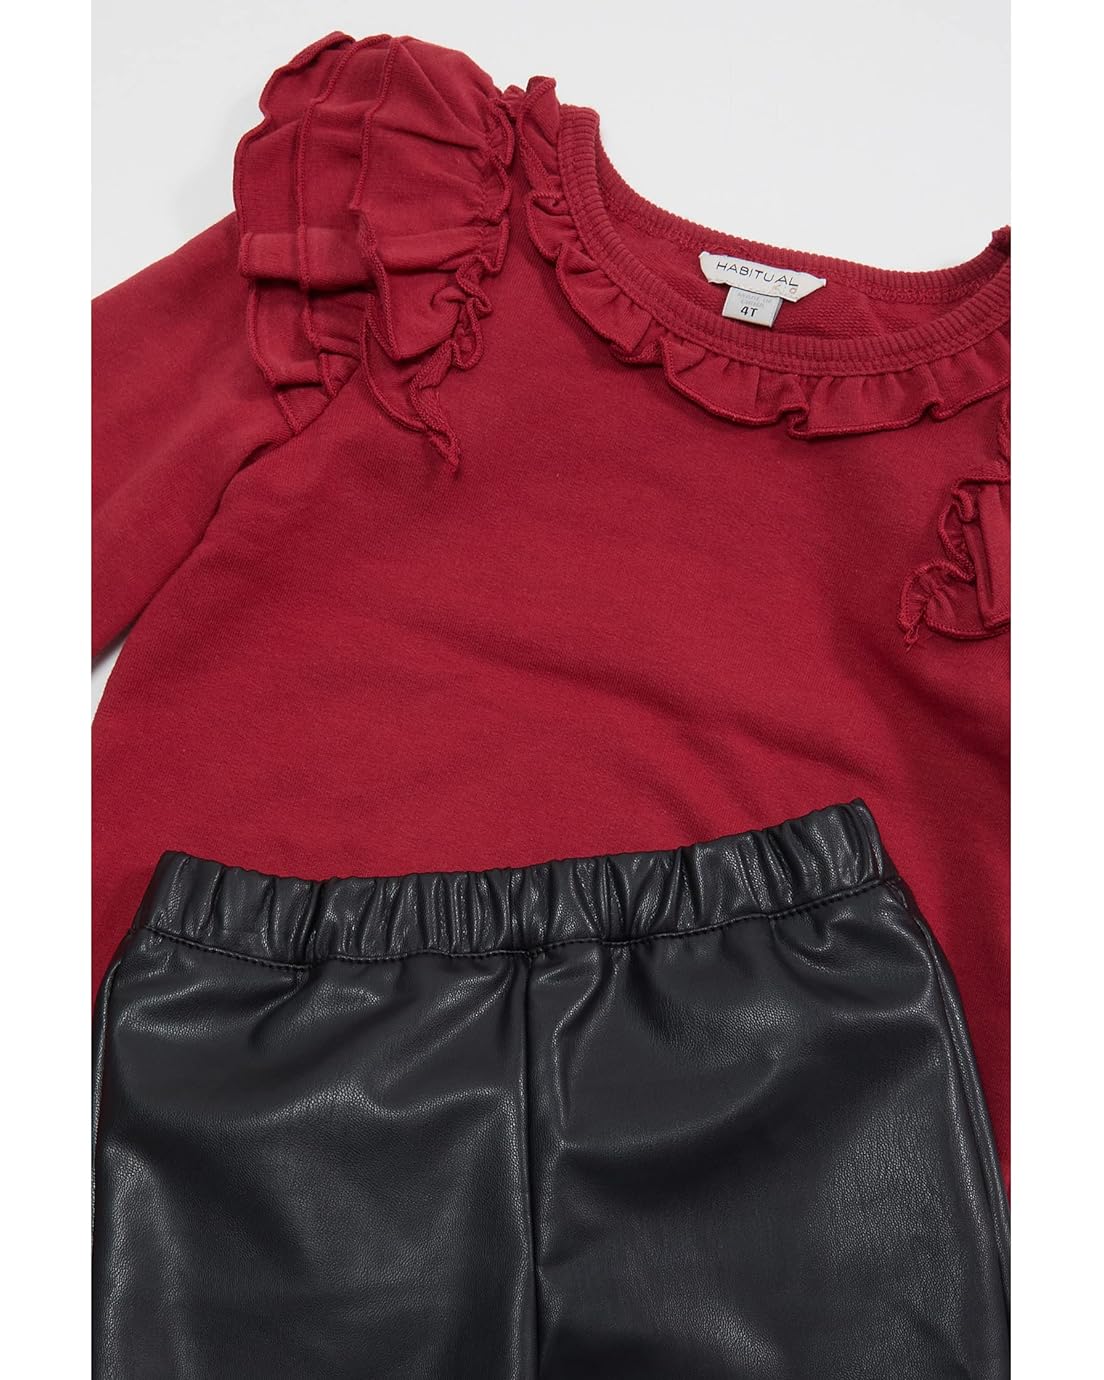  HABITUAL girl Ruffle Sleeve Pullover Set (Toddleru002FLittle Kids)